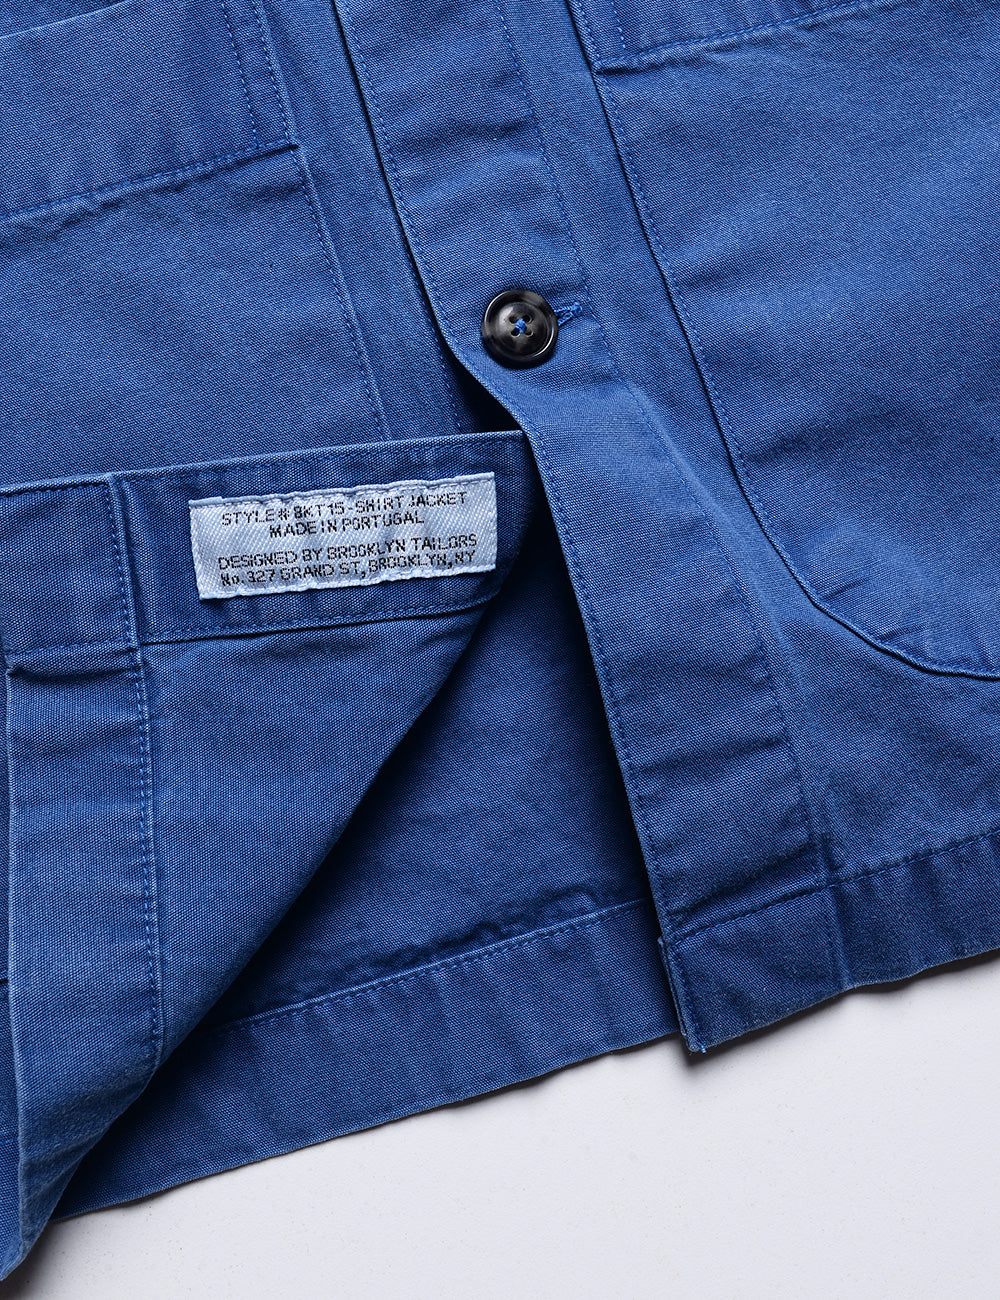 Detail shot of hem and interior labeling on Brooklyn Tailors BKT15 Shirt Jacket in Crisp Cotton - Washed Cobalt